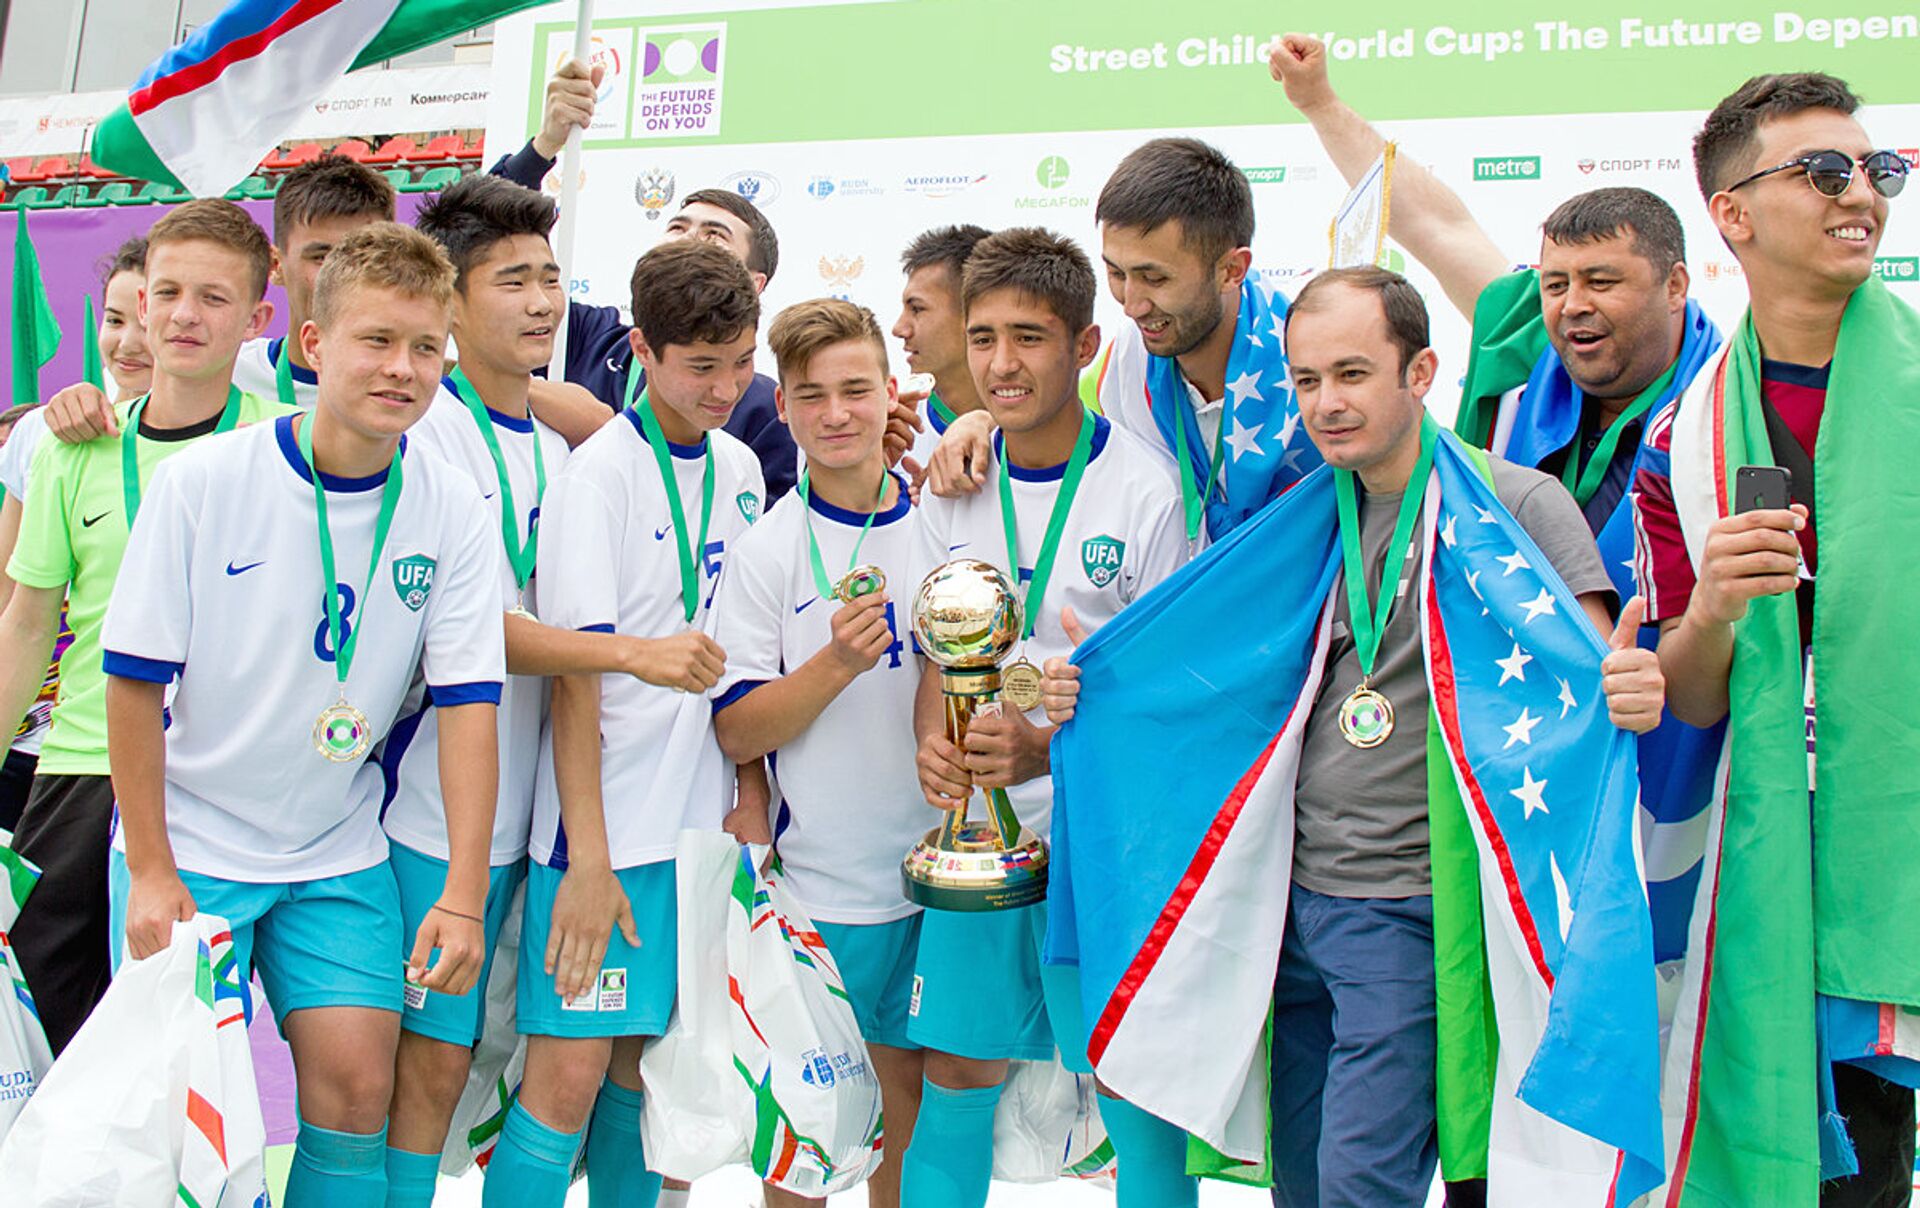 Узбекистан футбол турнир. Узбекистан молодежь спорт. Футбол Узбекистан дети. Спортсмены Узбекистана.